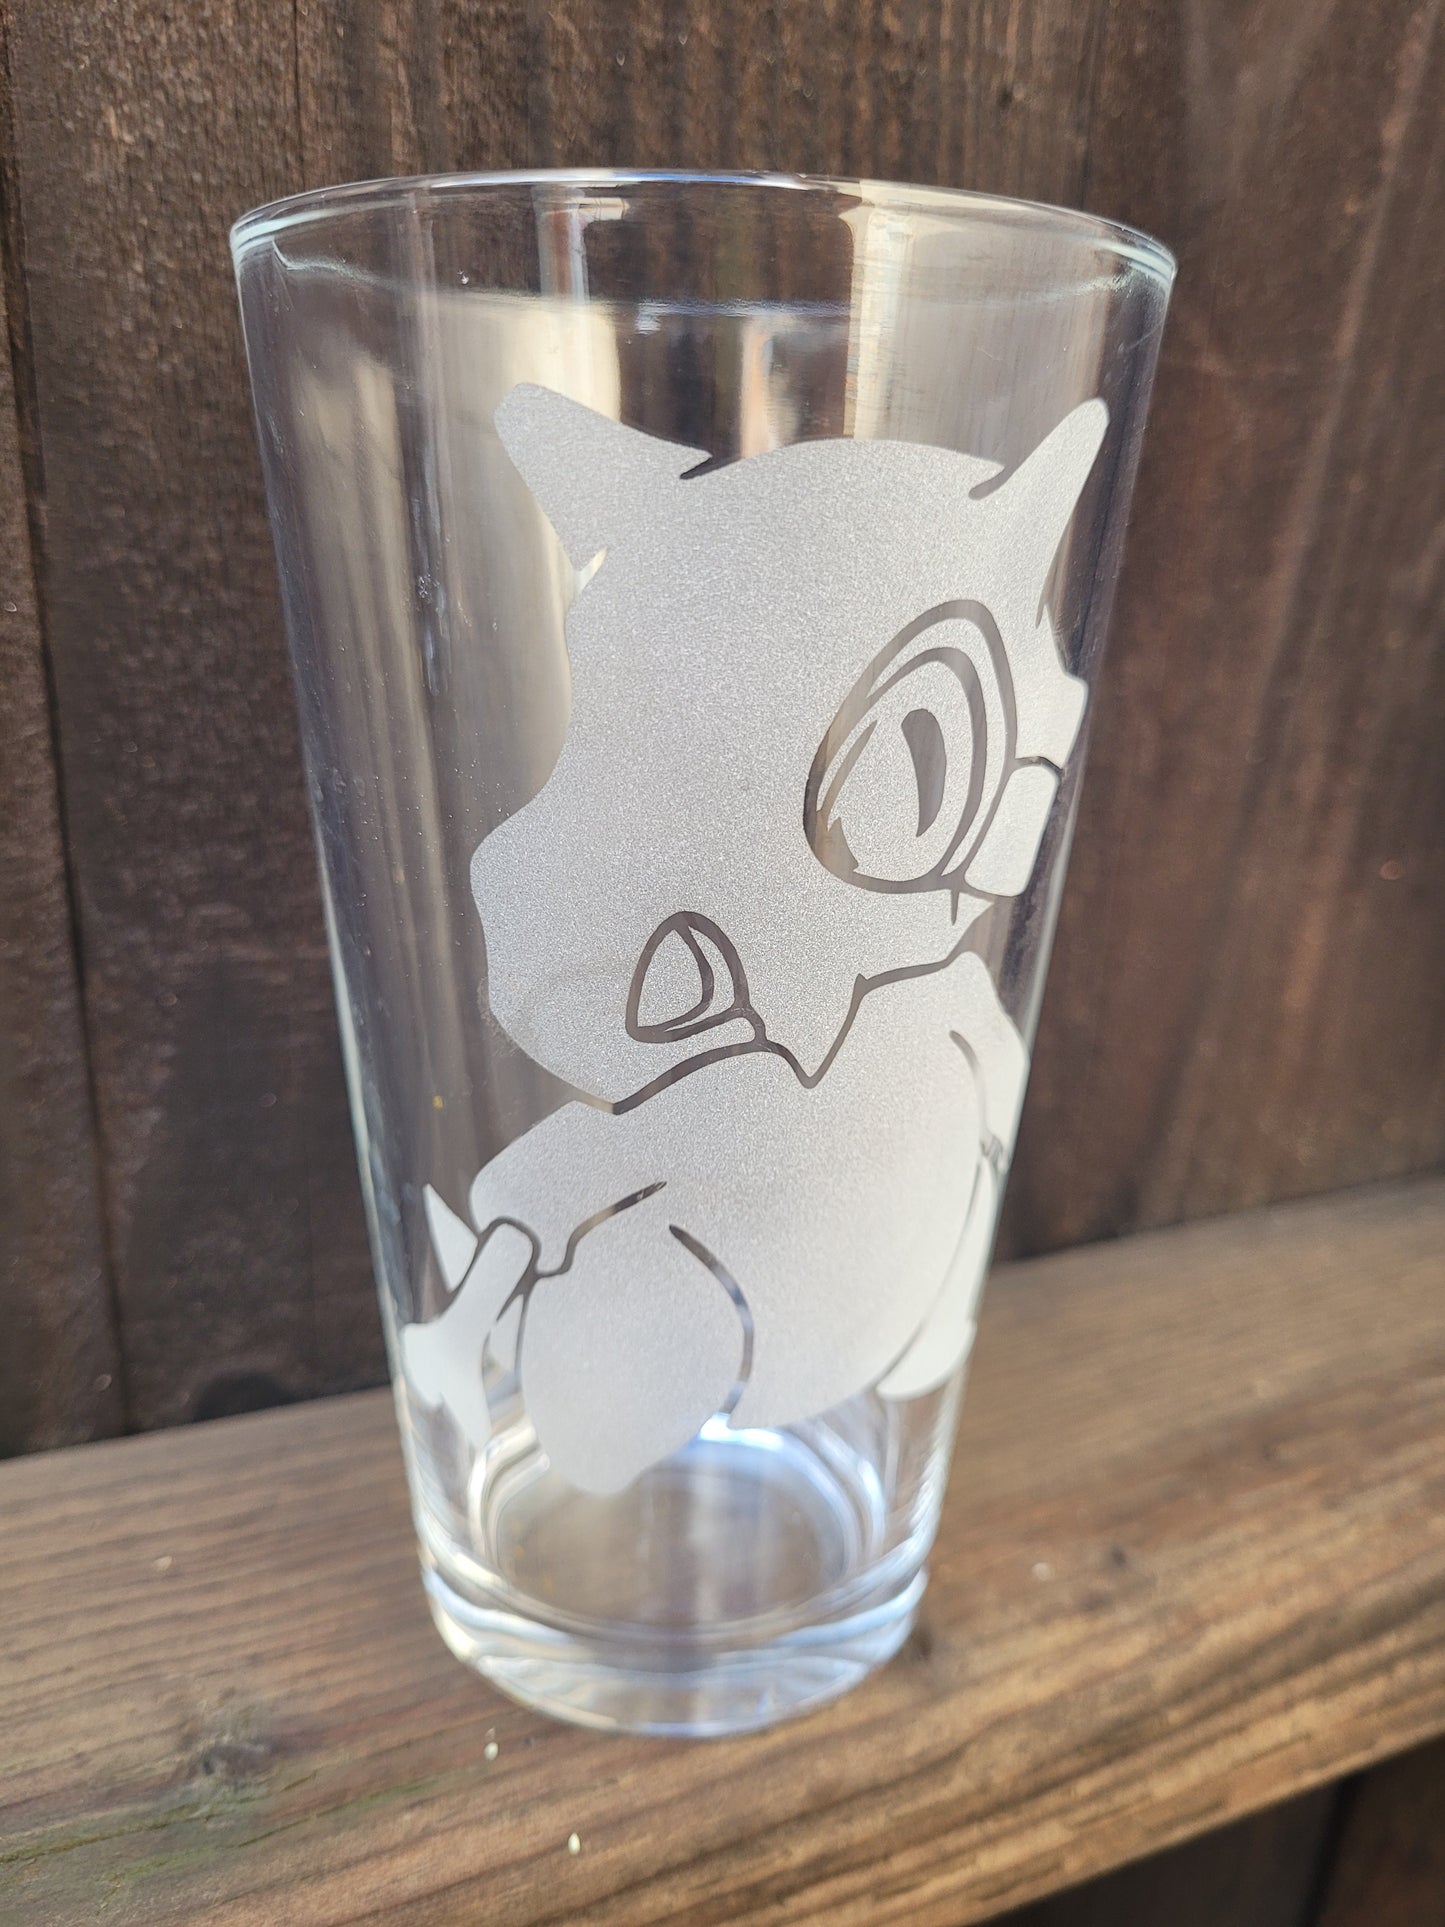 Cubone Pokémon Pint Glass - Made to Order